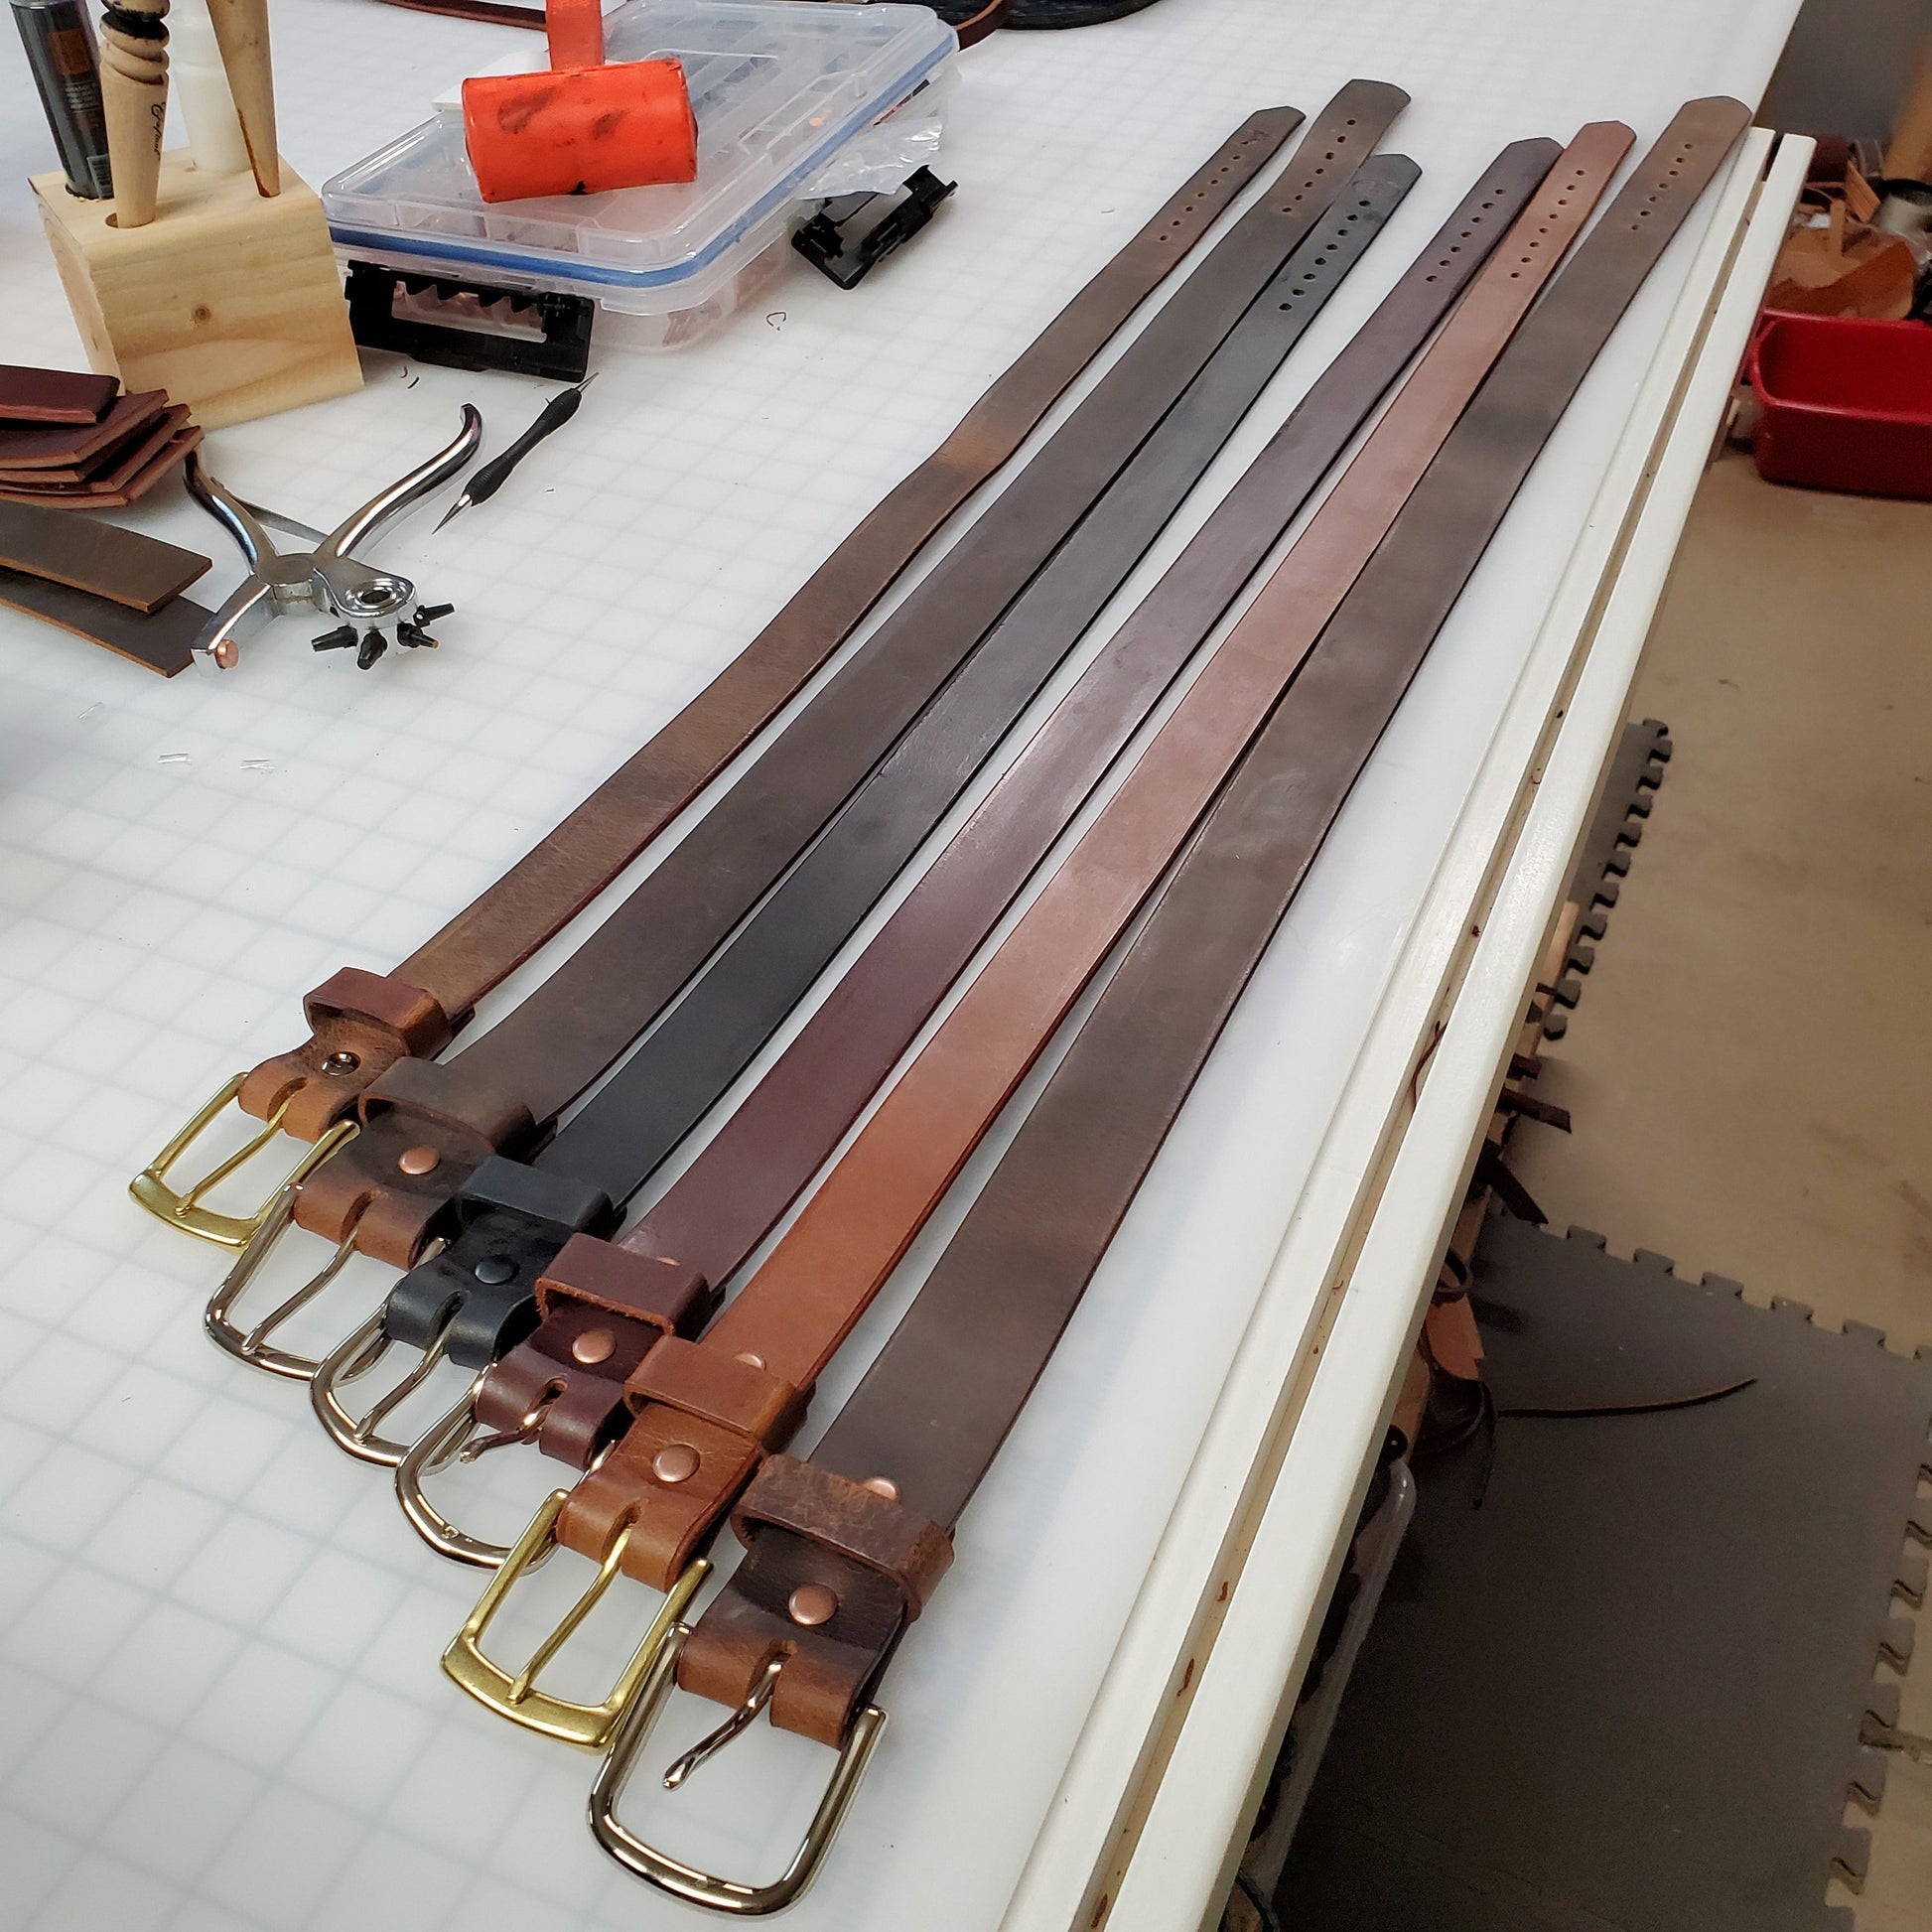 Build A Belt Class - Nov. 18th, 2023 - Lazy 3 Leather Company